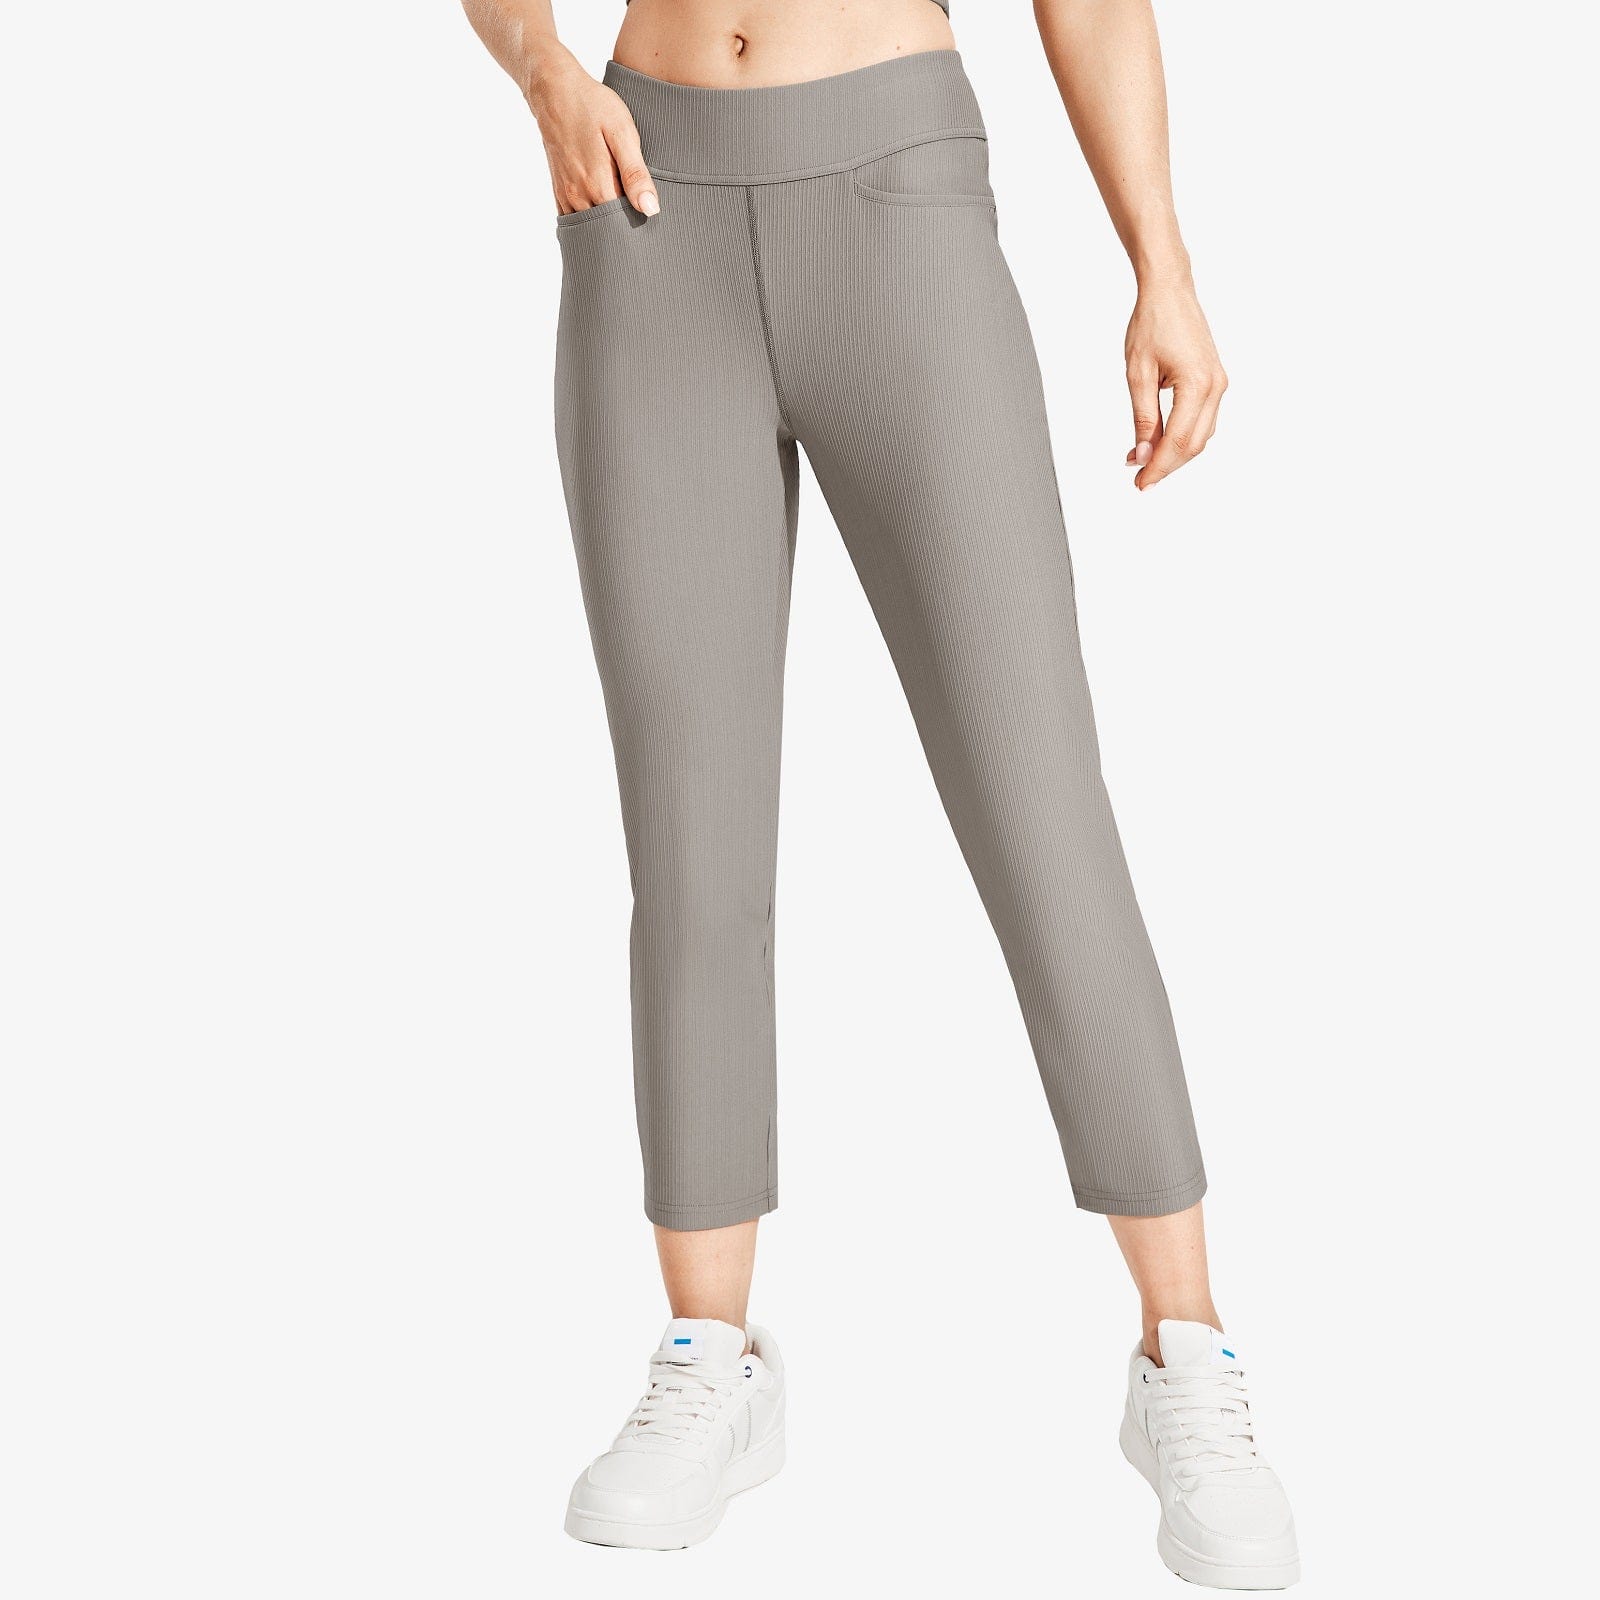 Women's High-Waisted Ribbed Capri Legging Yoga Pants - Light Grey / XS